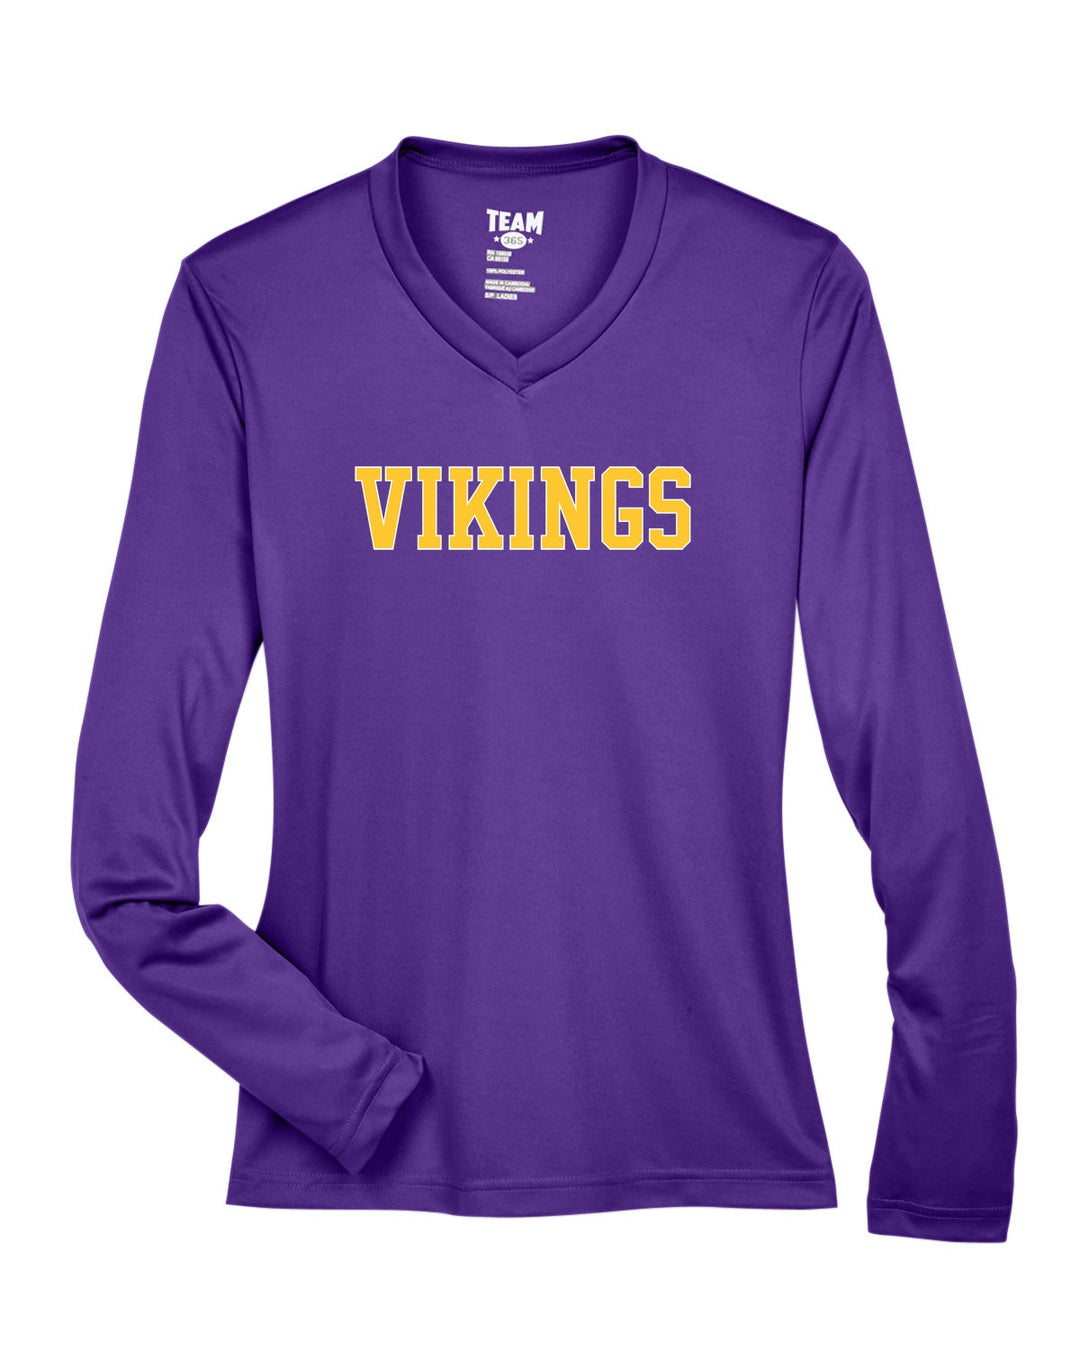 Flag Football Vikings Team 365 Women's Zone Performance Long-Sleeve T-Shirt (TT11WL)